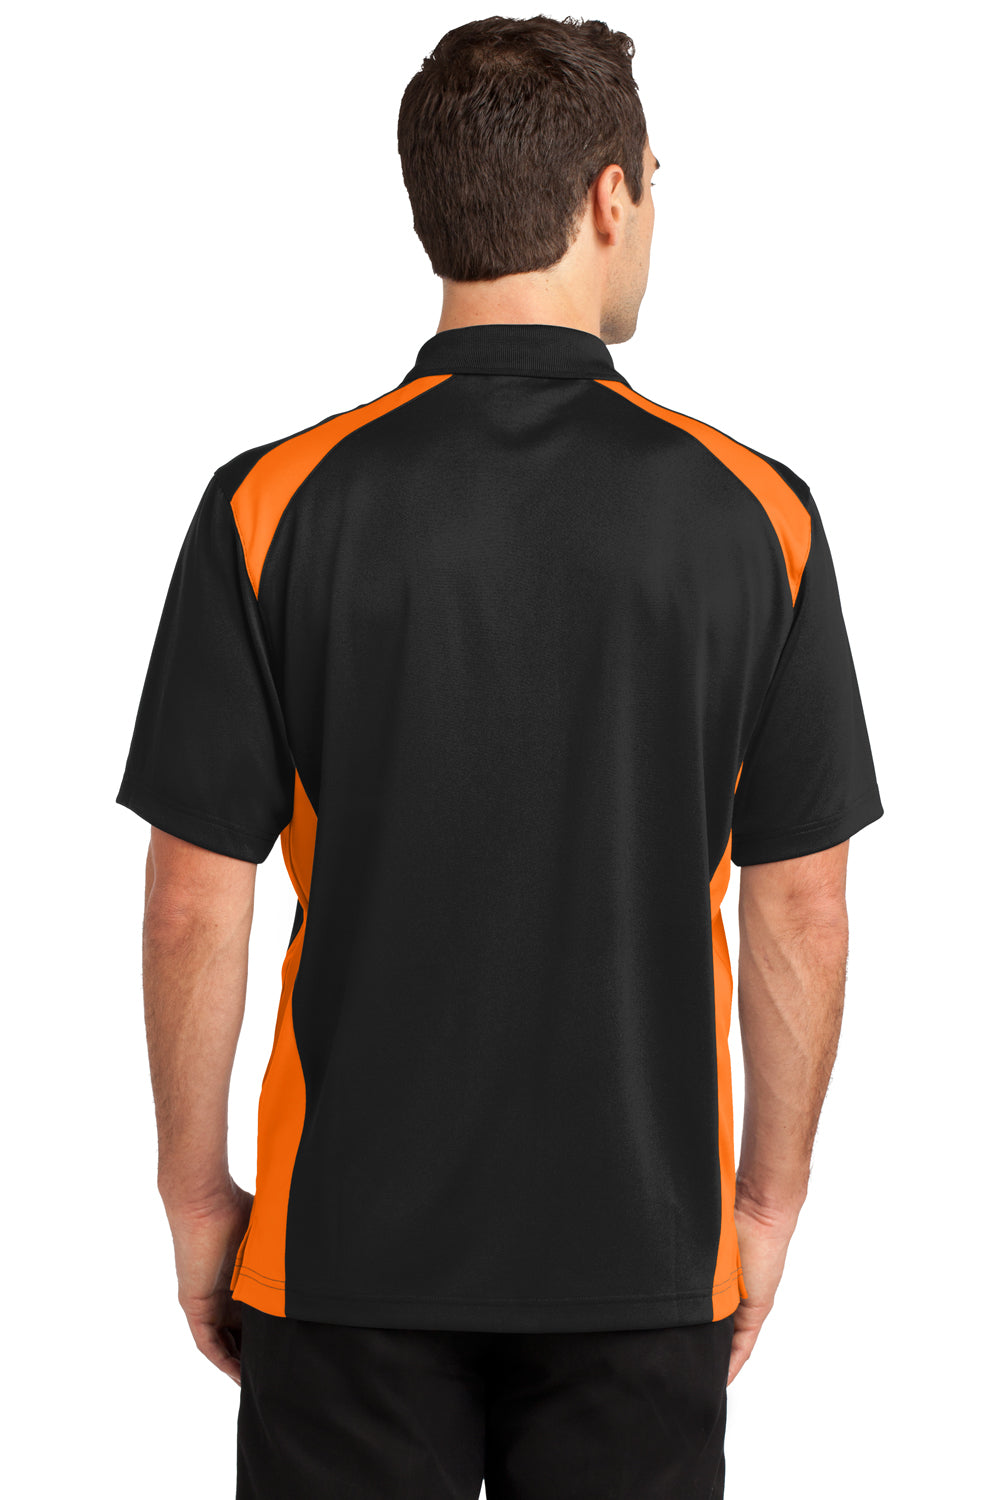 CornerStone CS416 Mens Select Moisture Wicking Short Sleeve Polo Shirt w/ Pocket Black/Neon Orange Back